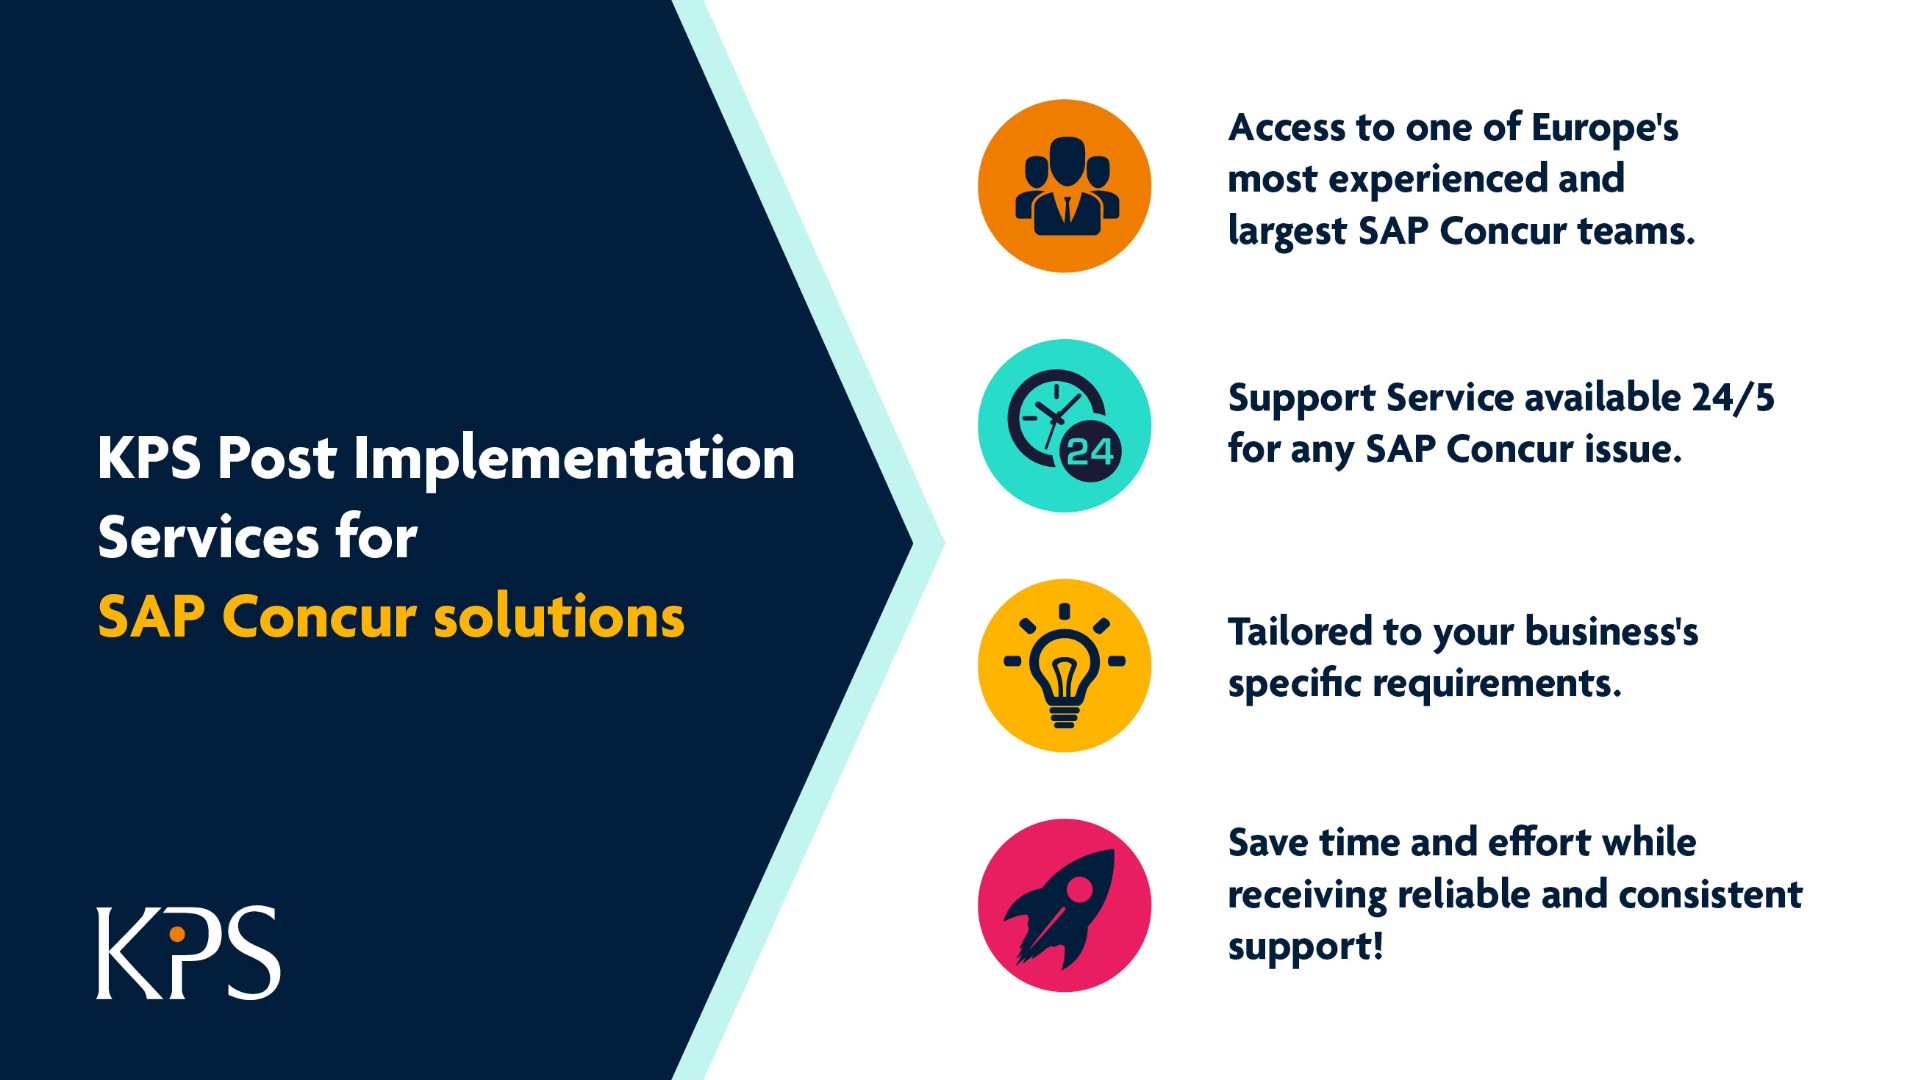 KPS Post Implementation Services for SAP Concur solutions benefits